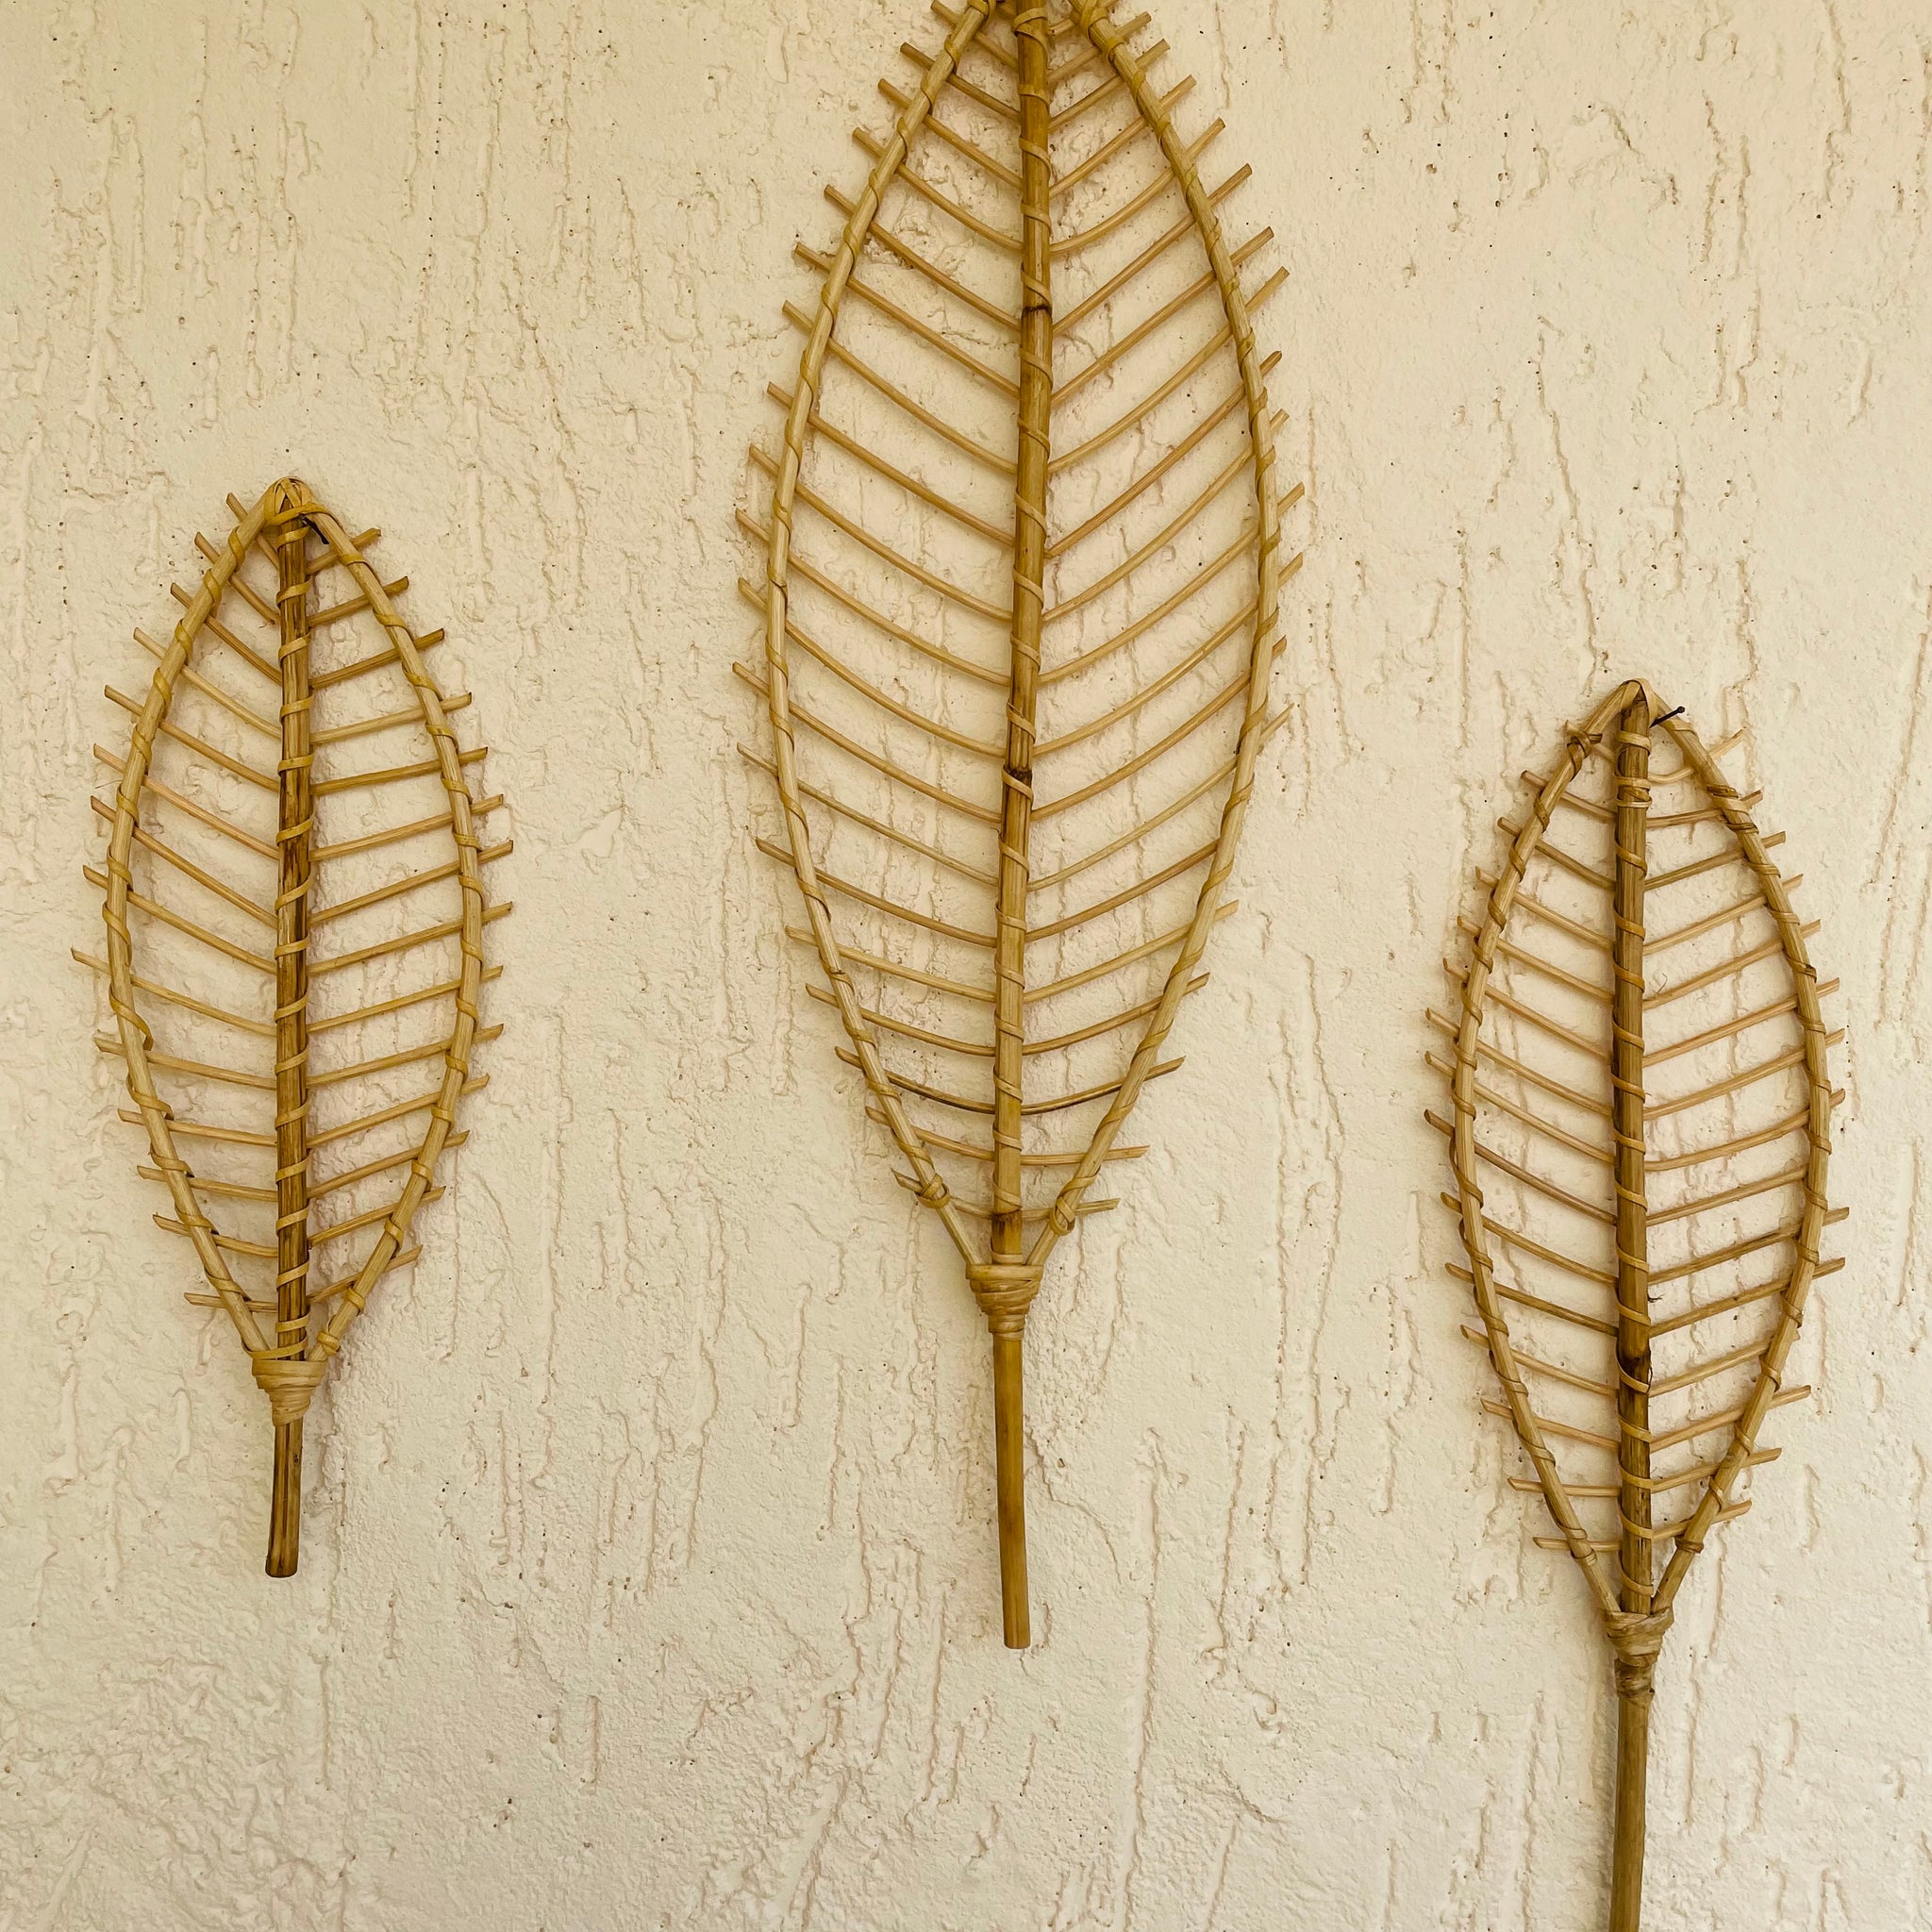 Leaf Cane Wall Decor - Set of 3